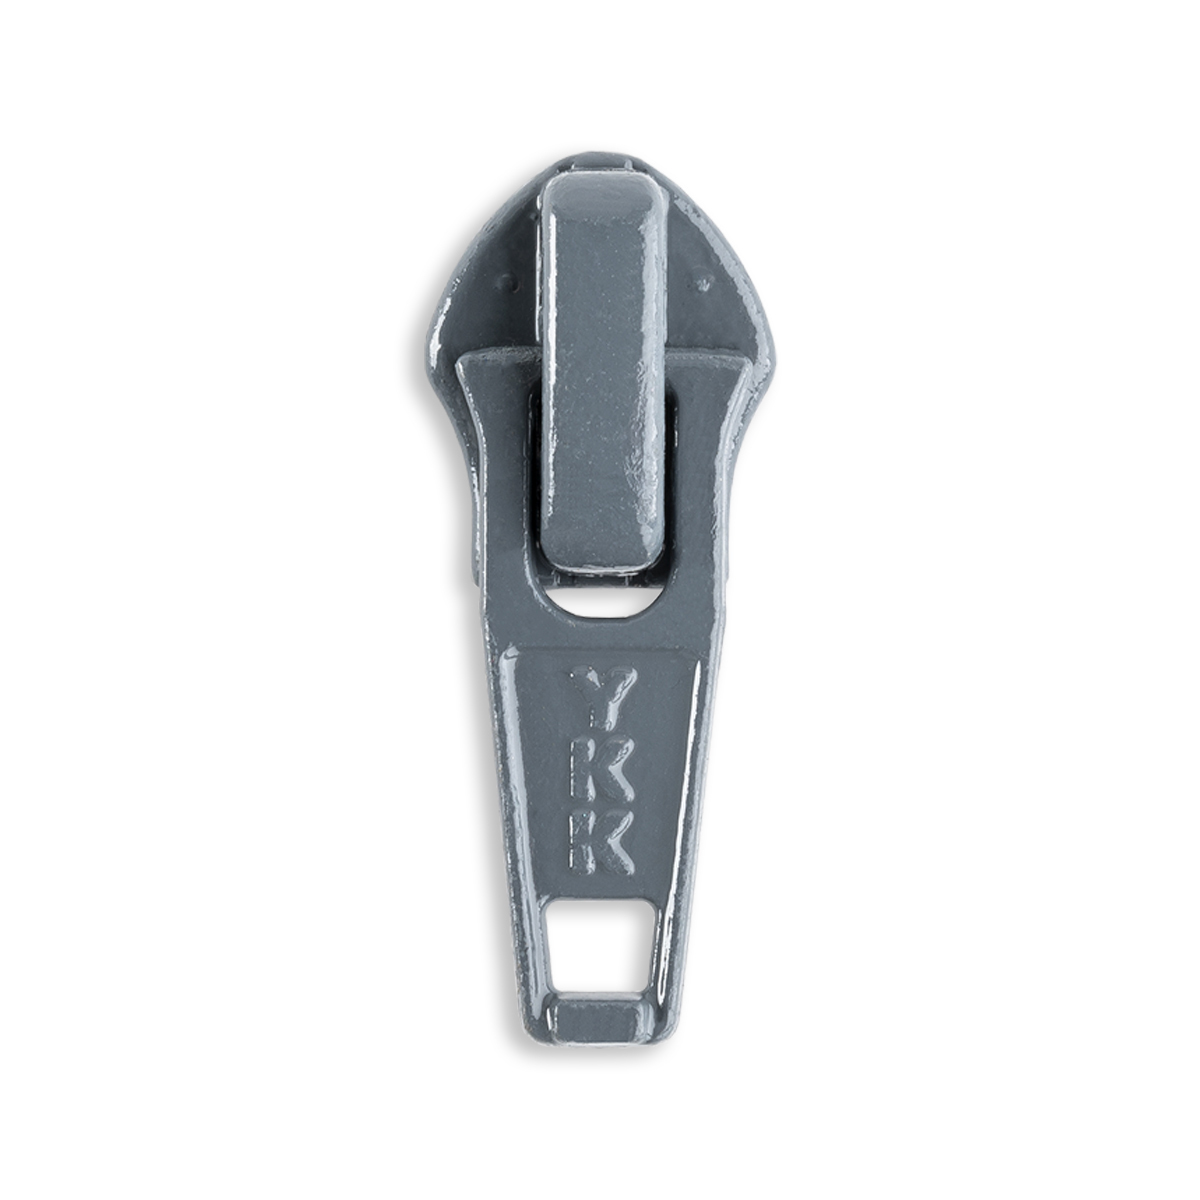 YKK Zipper Repair Kit Solution Top or Bottom Stoppers Suit for #5 Zipper